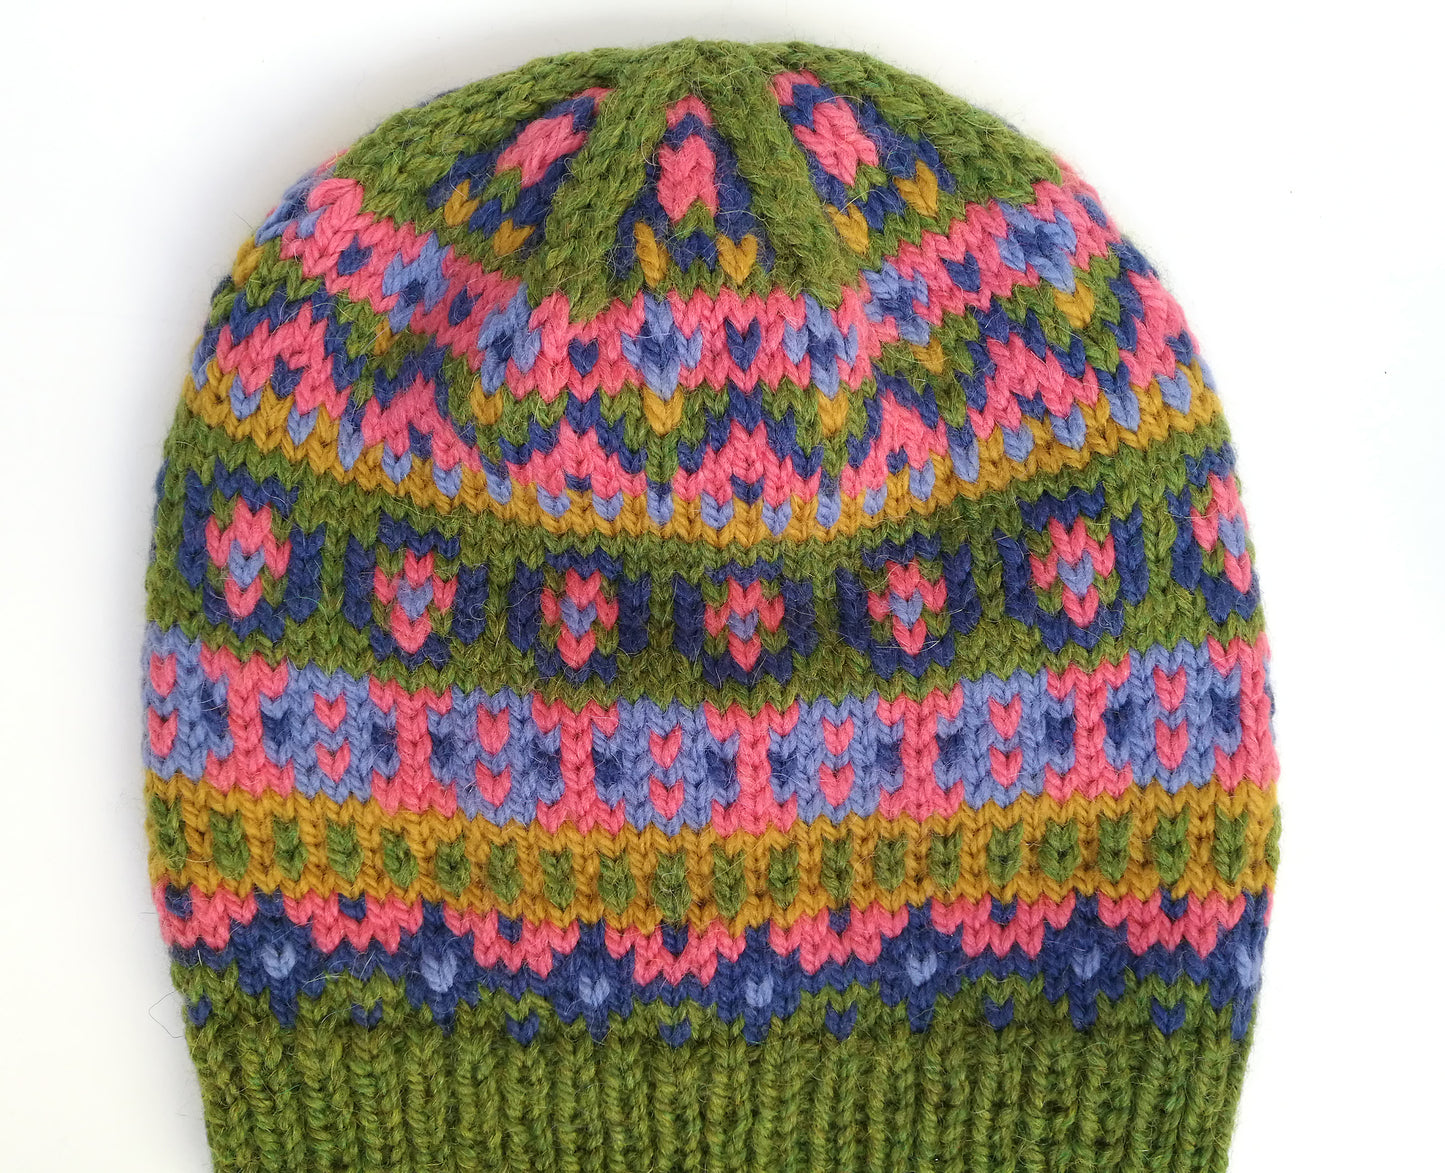 Hand-knitted Fair Isle hat in Bergen knitting pattern